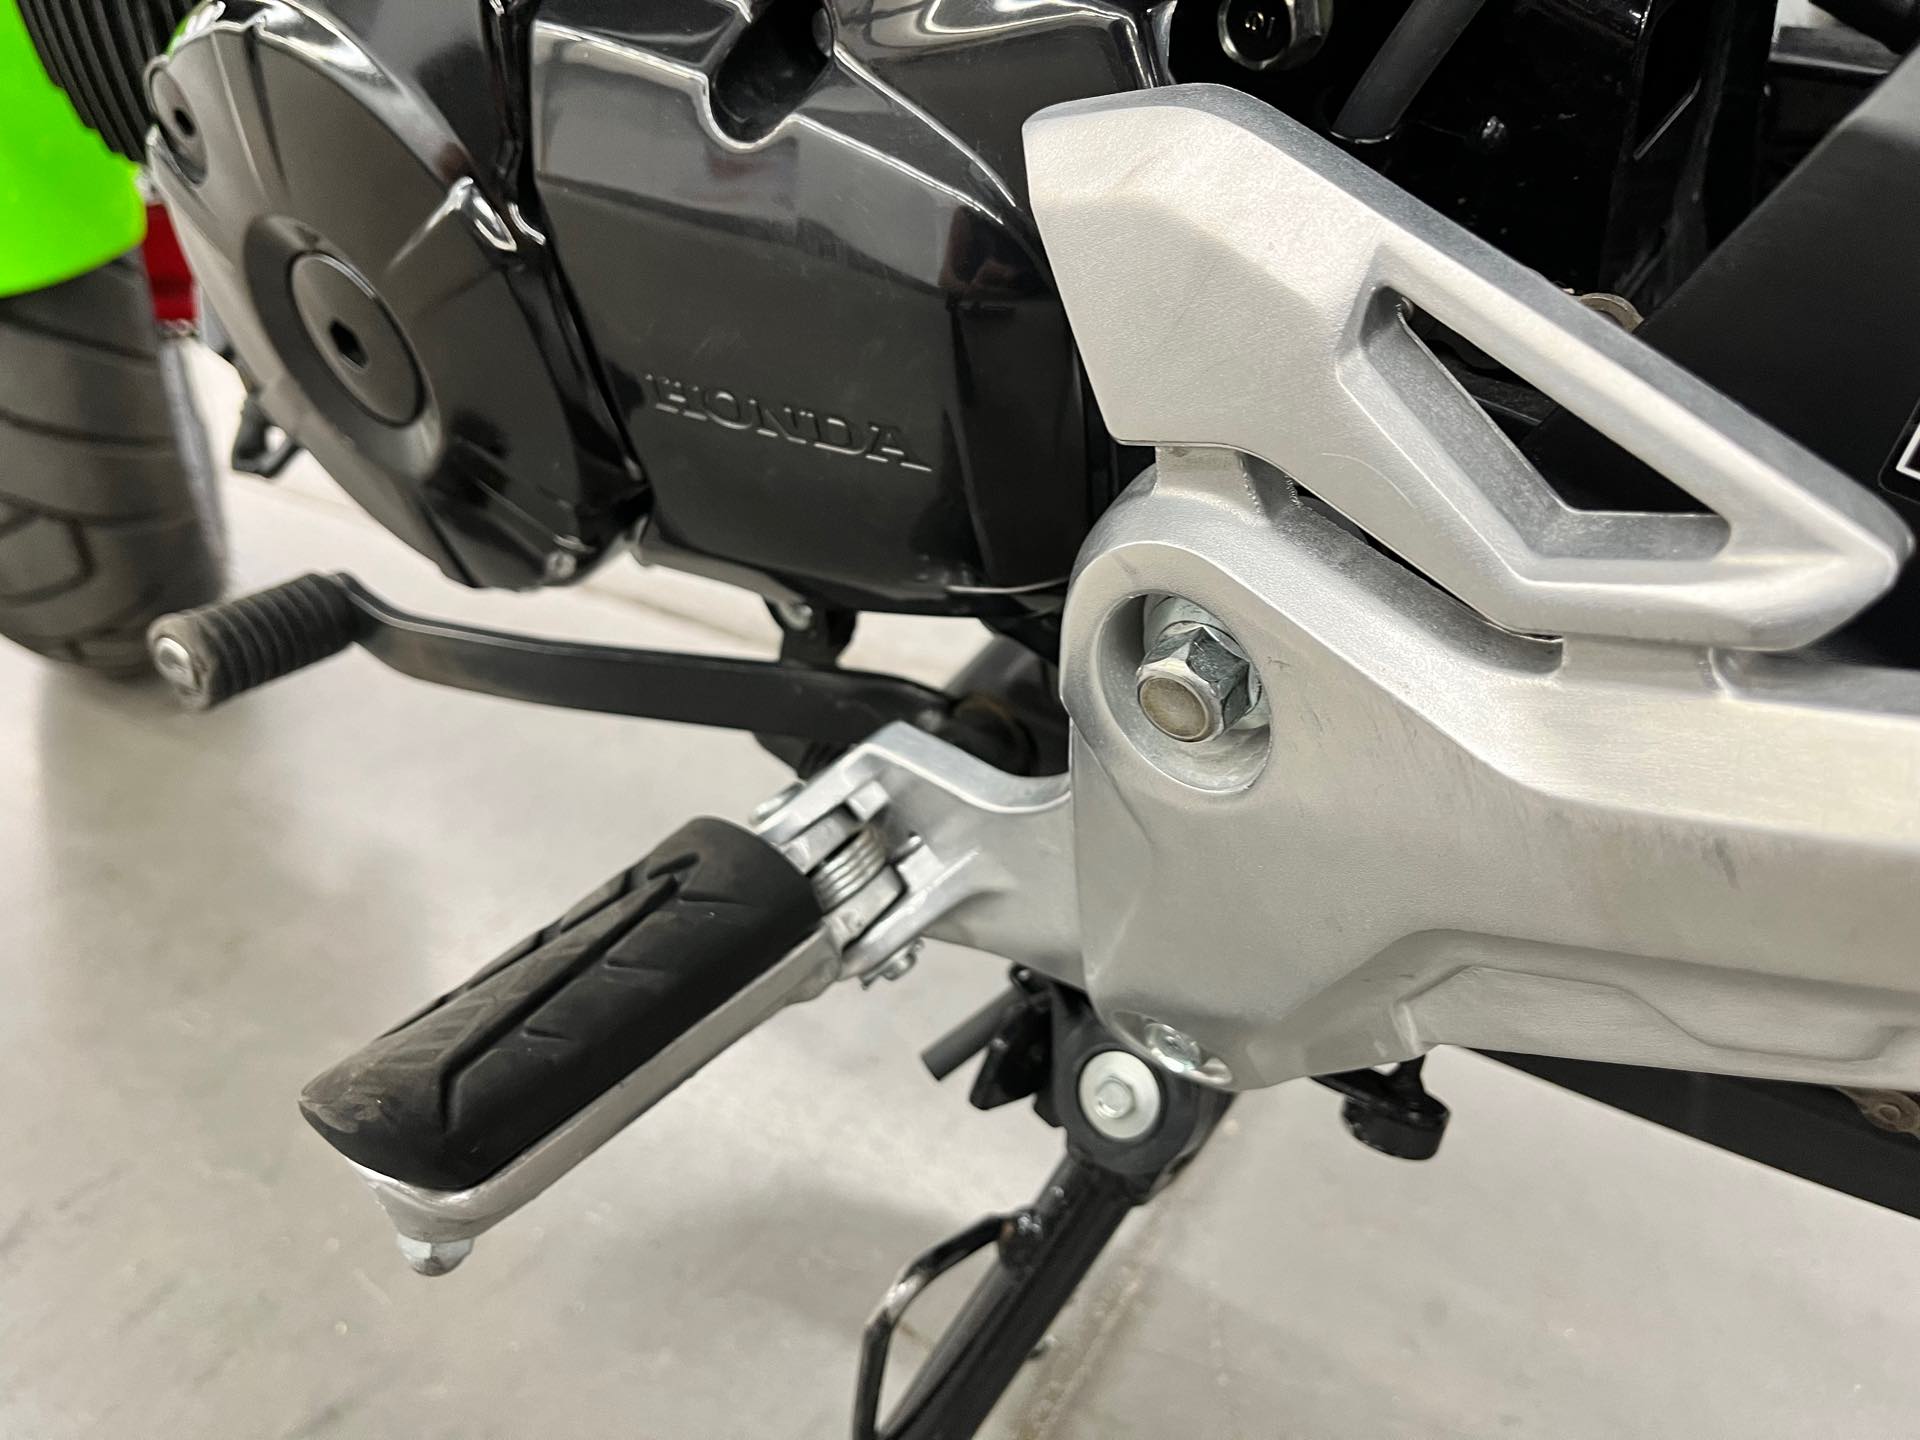 2019 Honda Grom Base at Aces Motorcycles - Denver